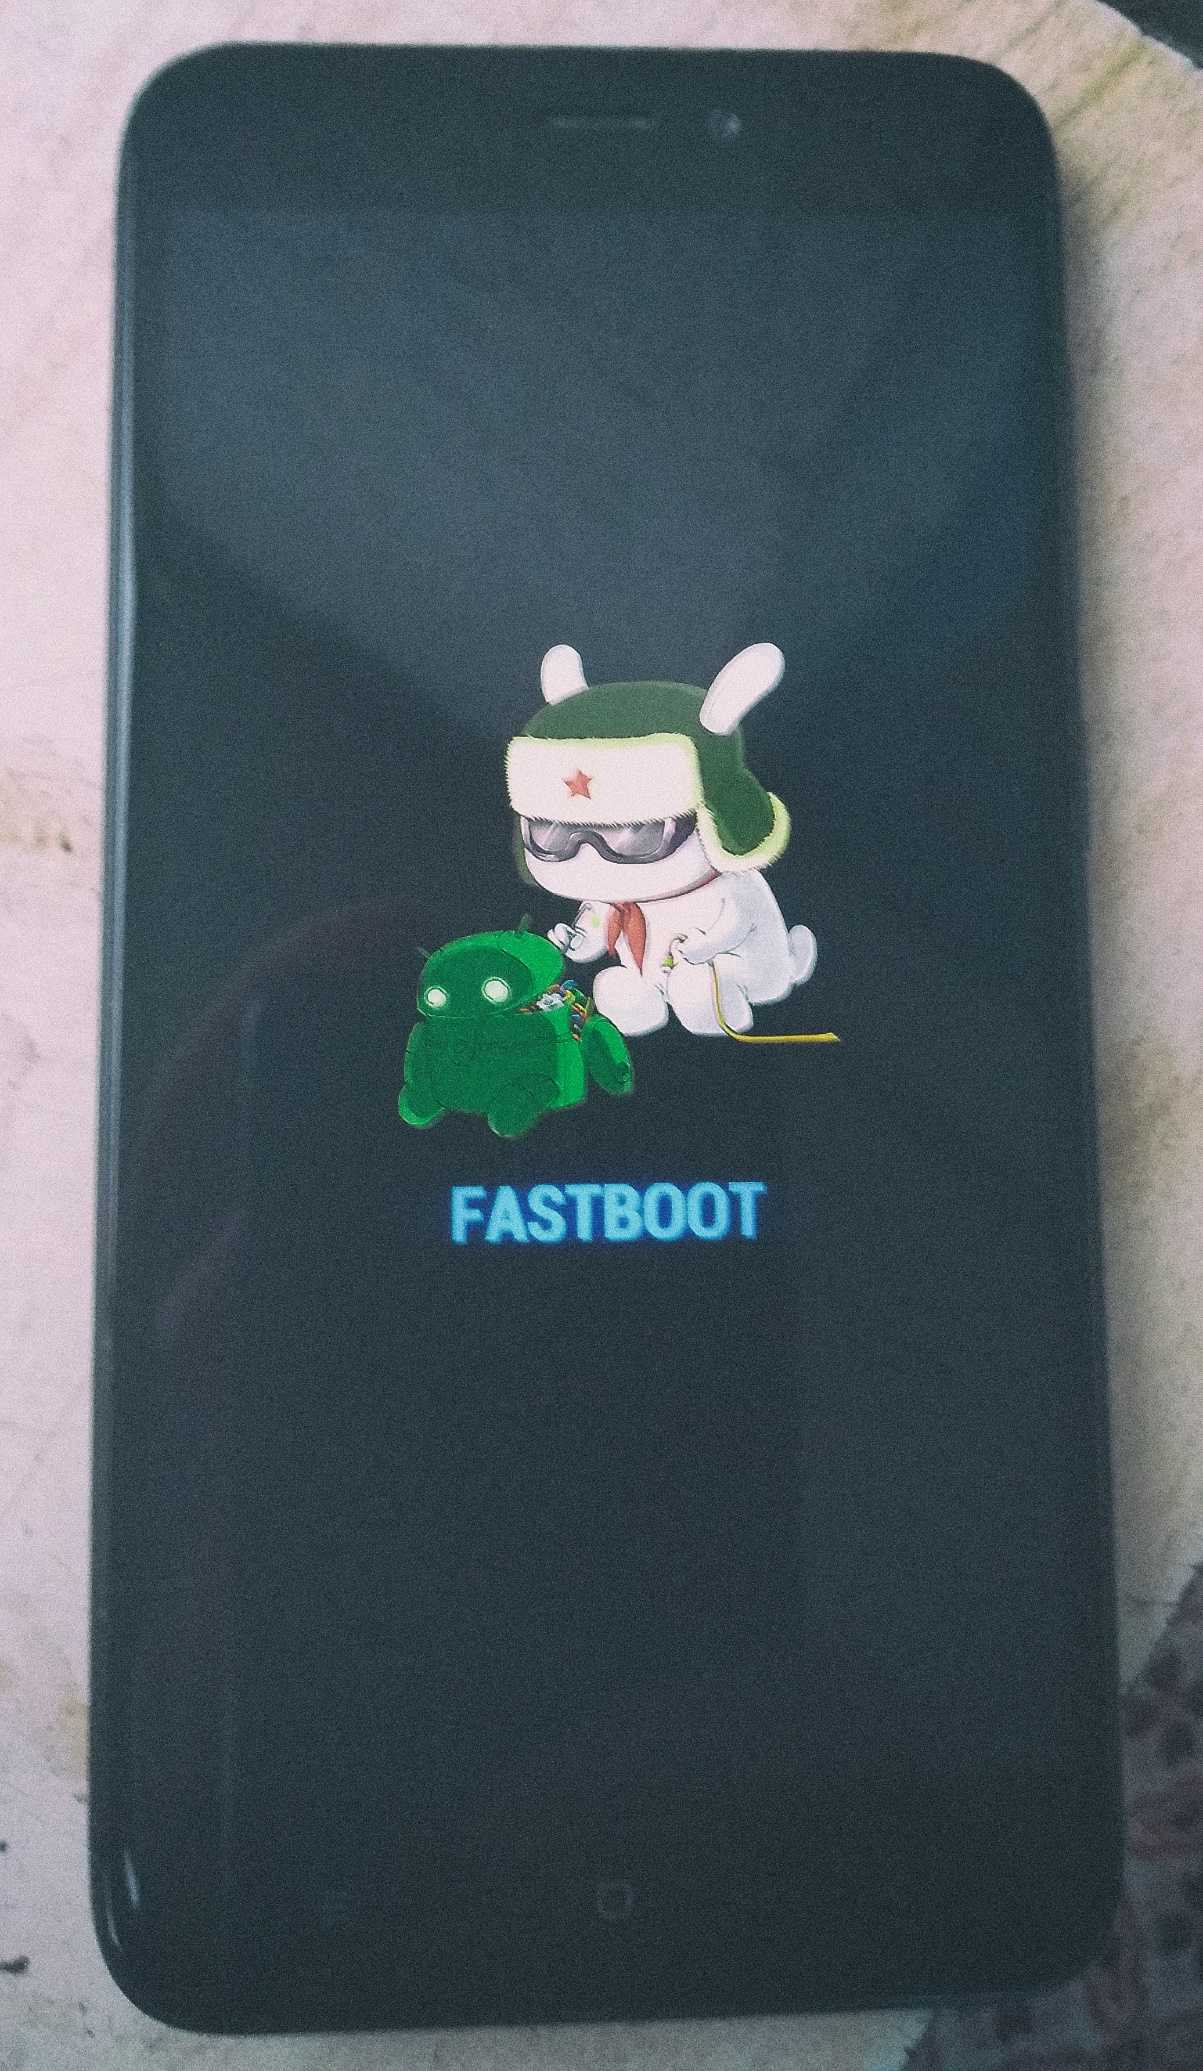 Что такое режим fastboot mode на android